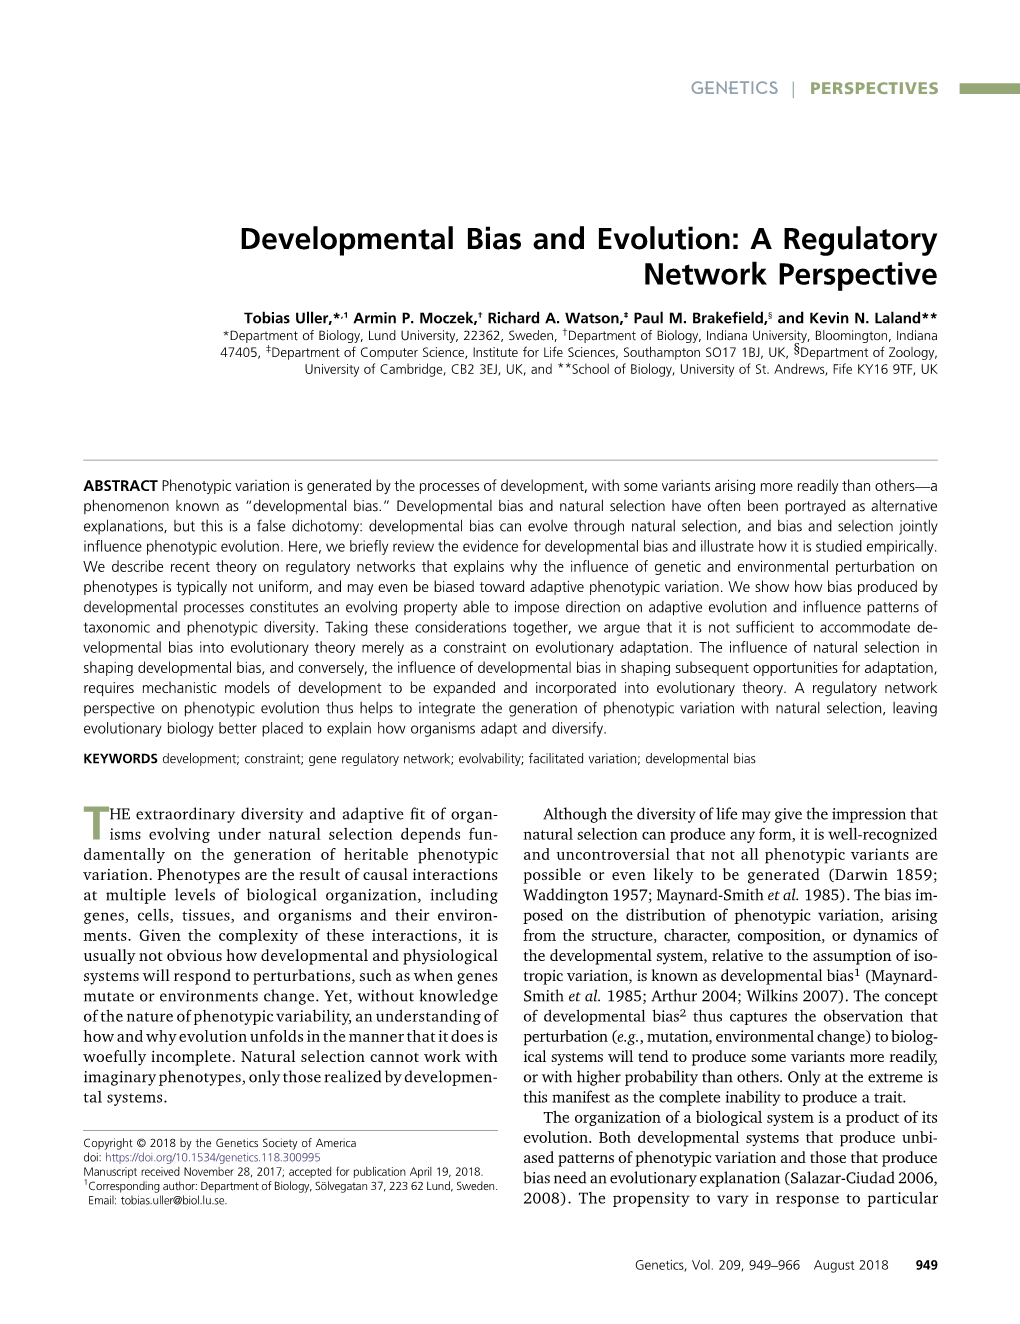 Developmental Bias and Evolution: a Regulatory Network Perspective